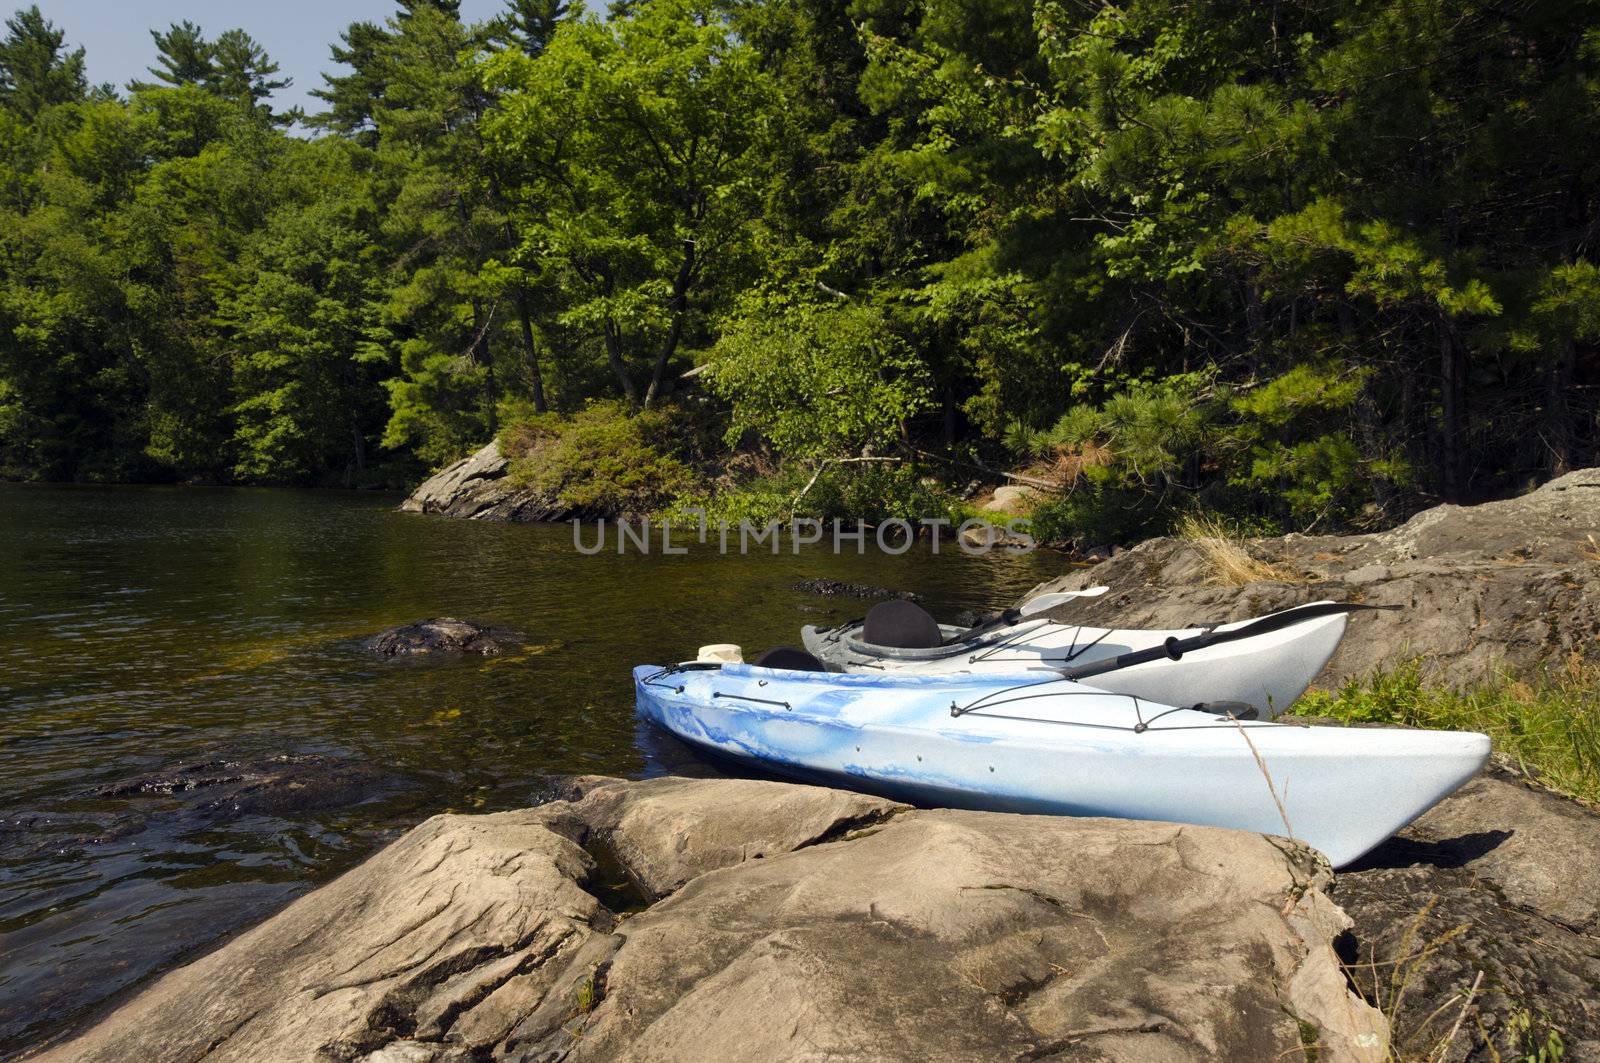 Kayaks on the Rocky Shoreline by Gordo25